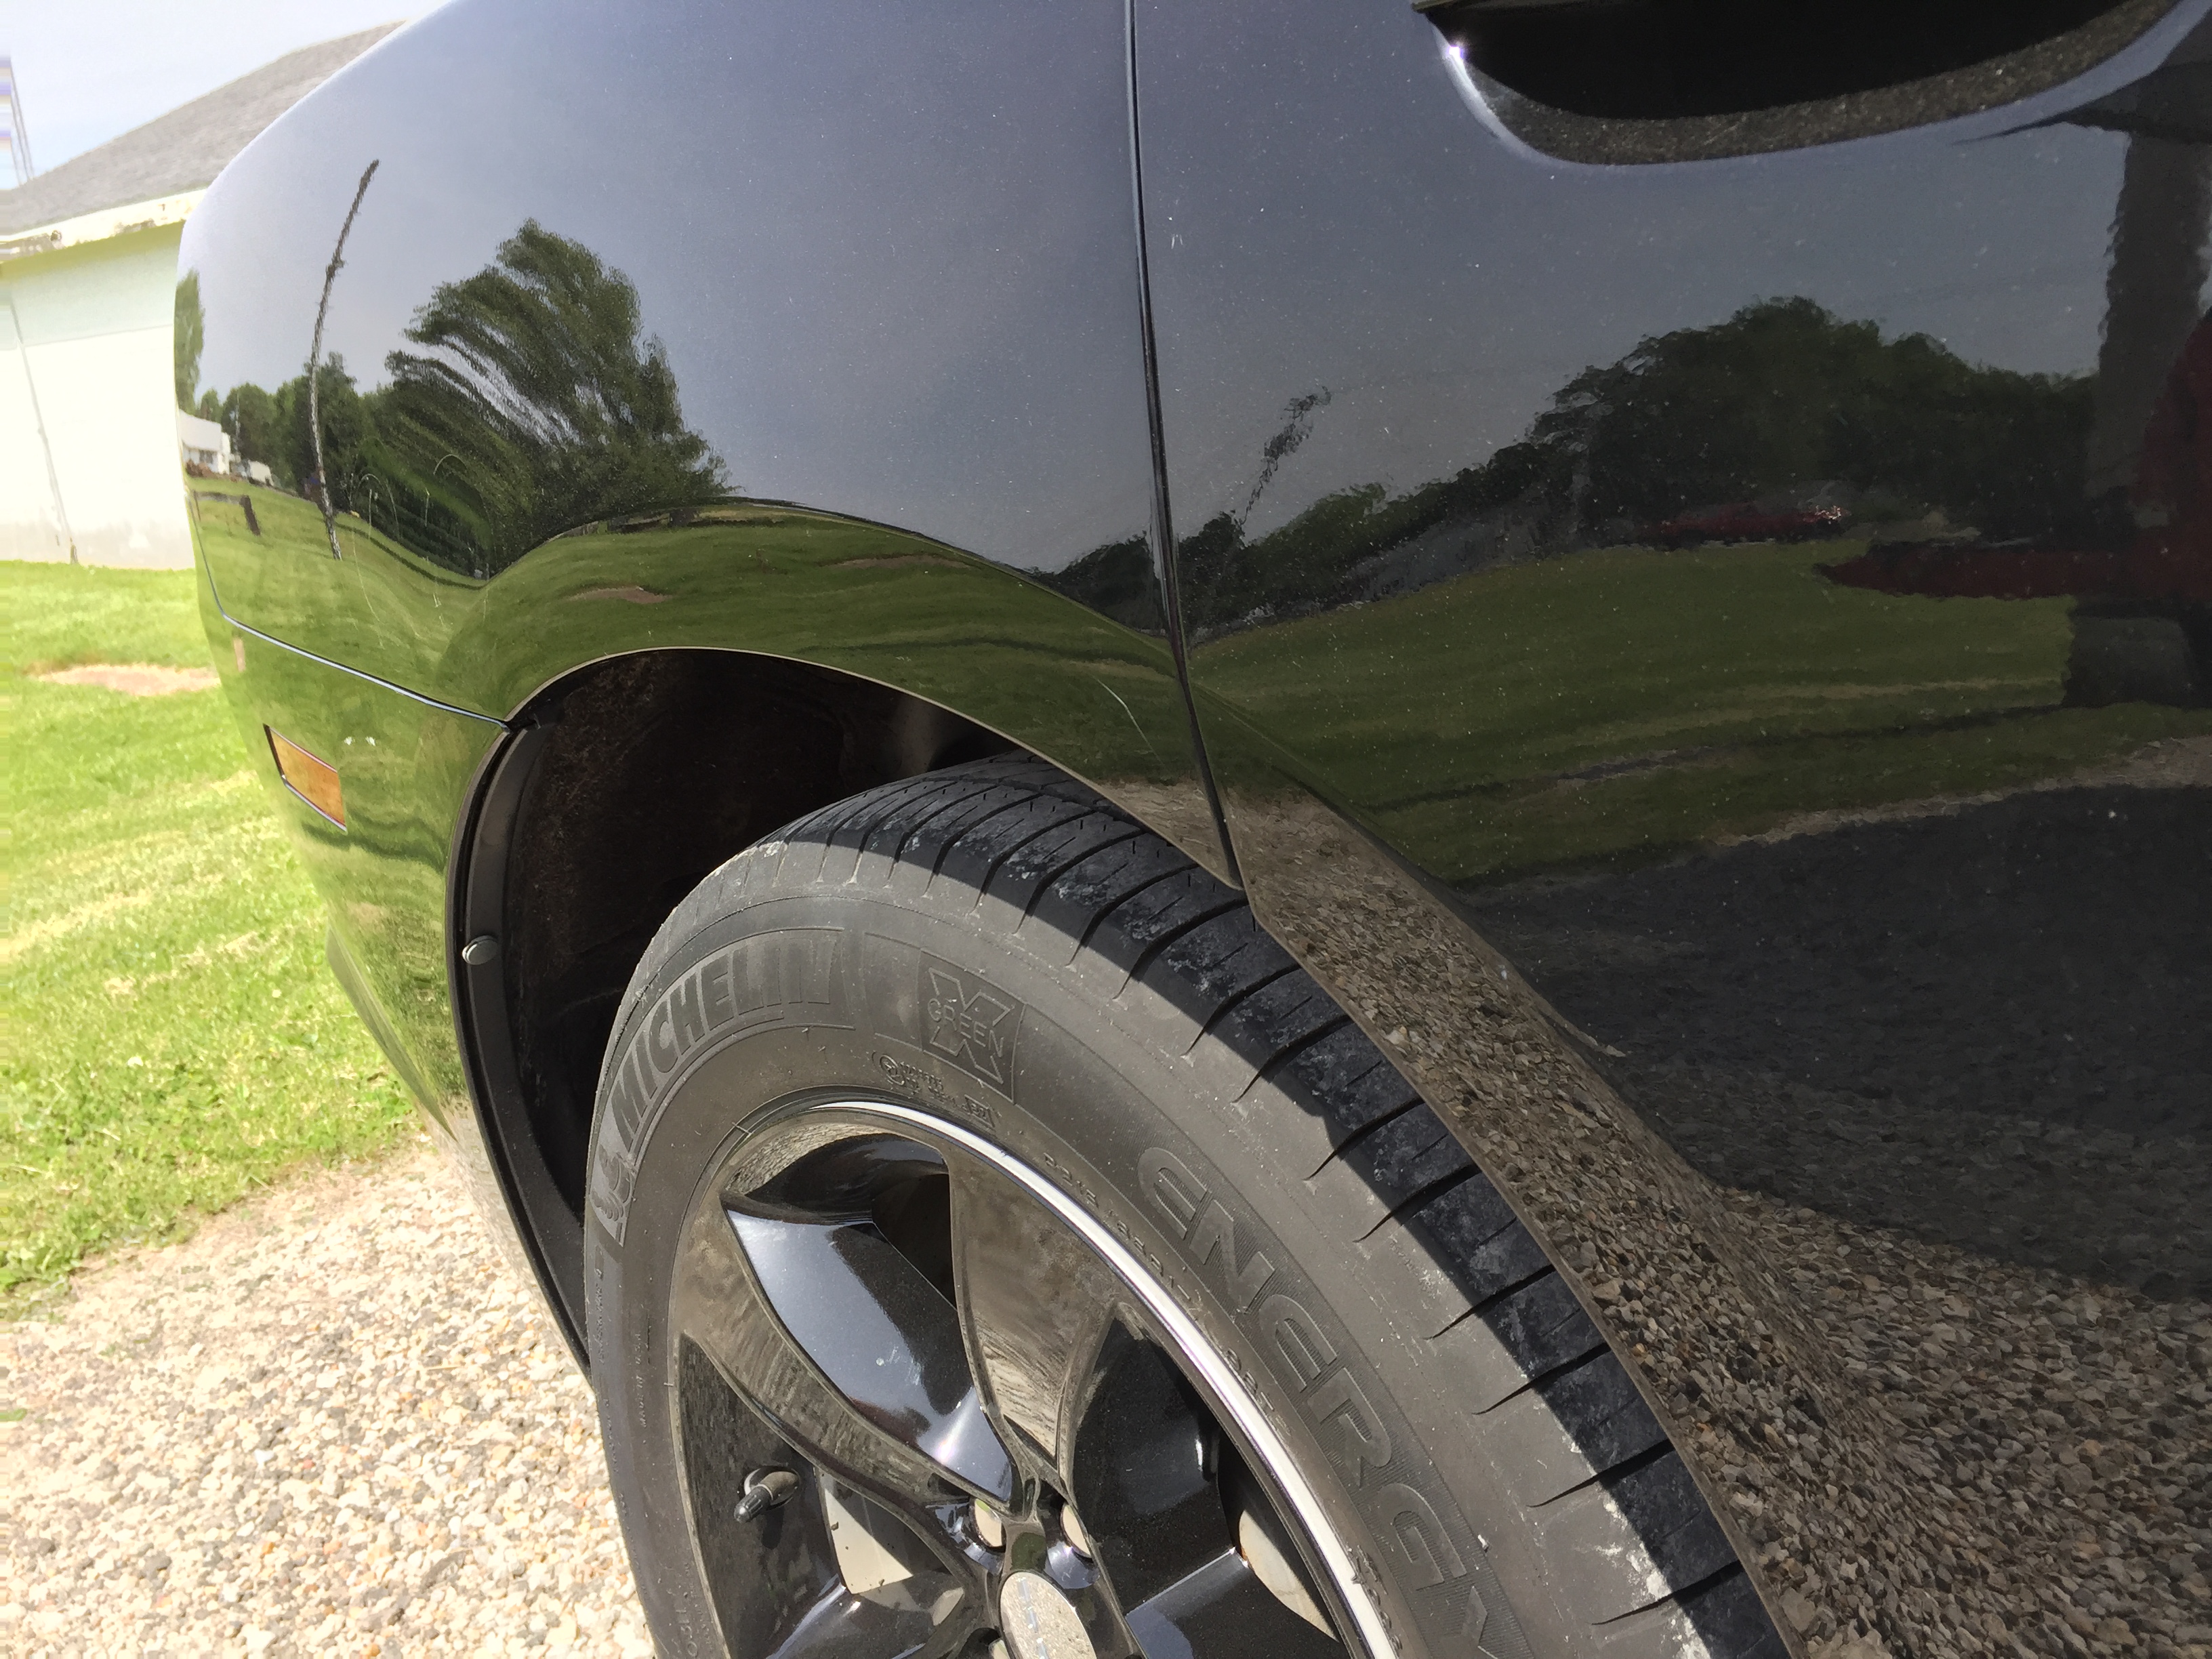 2013 Dodge Charger, Dent Repair Rear Quarter, Http://217dent.com